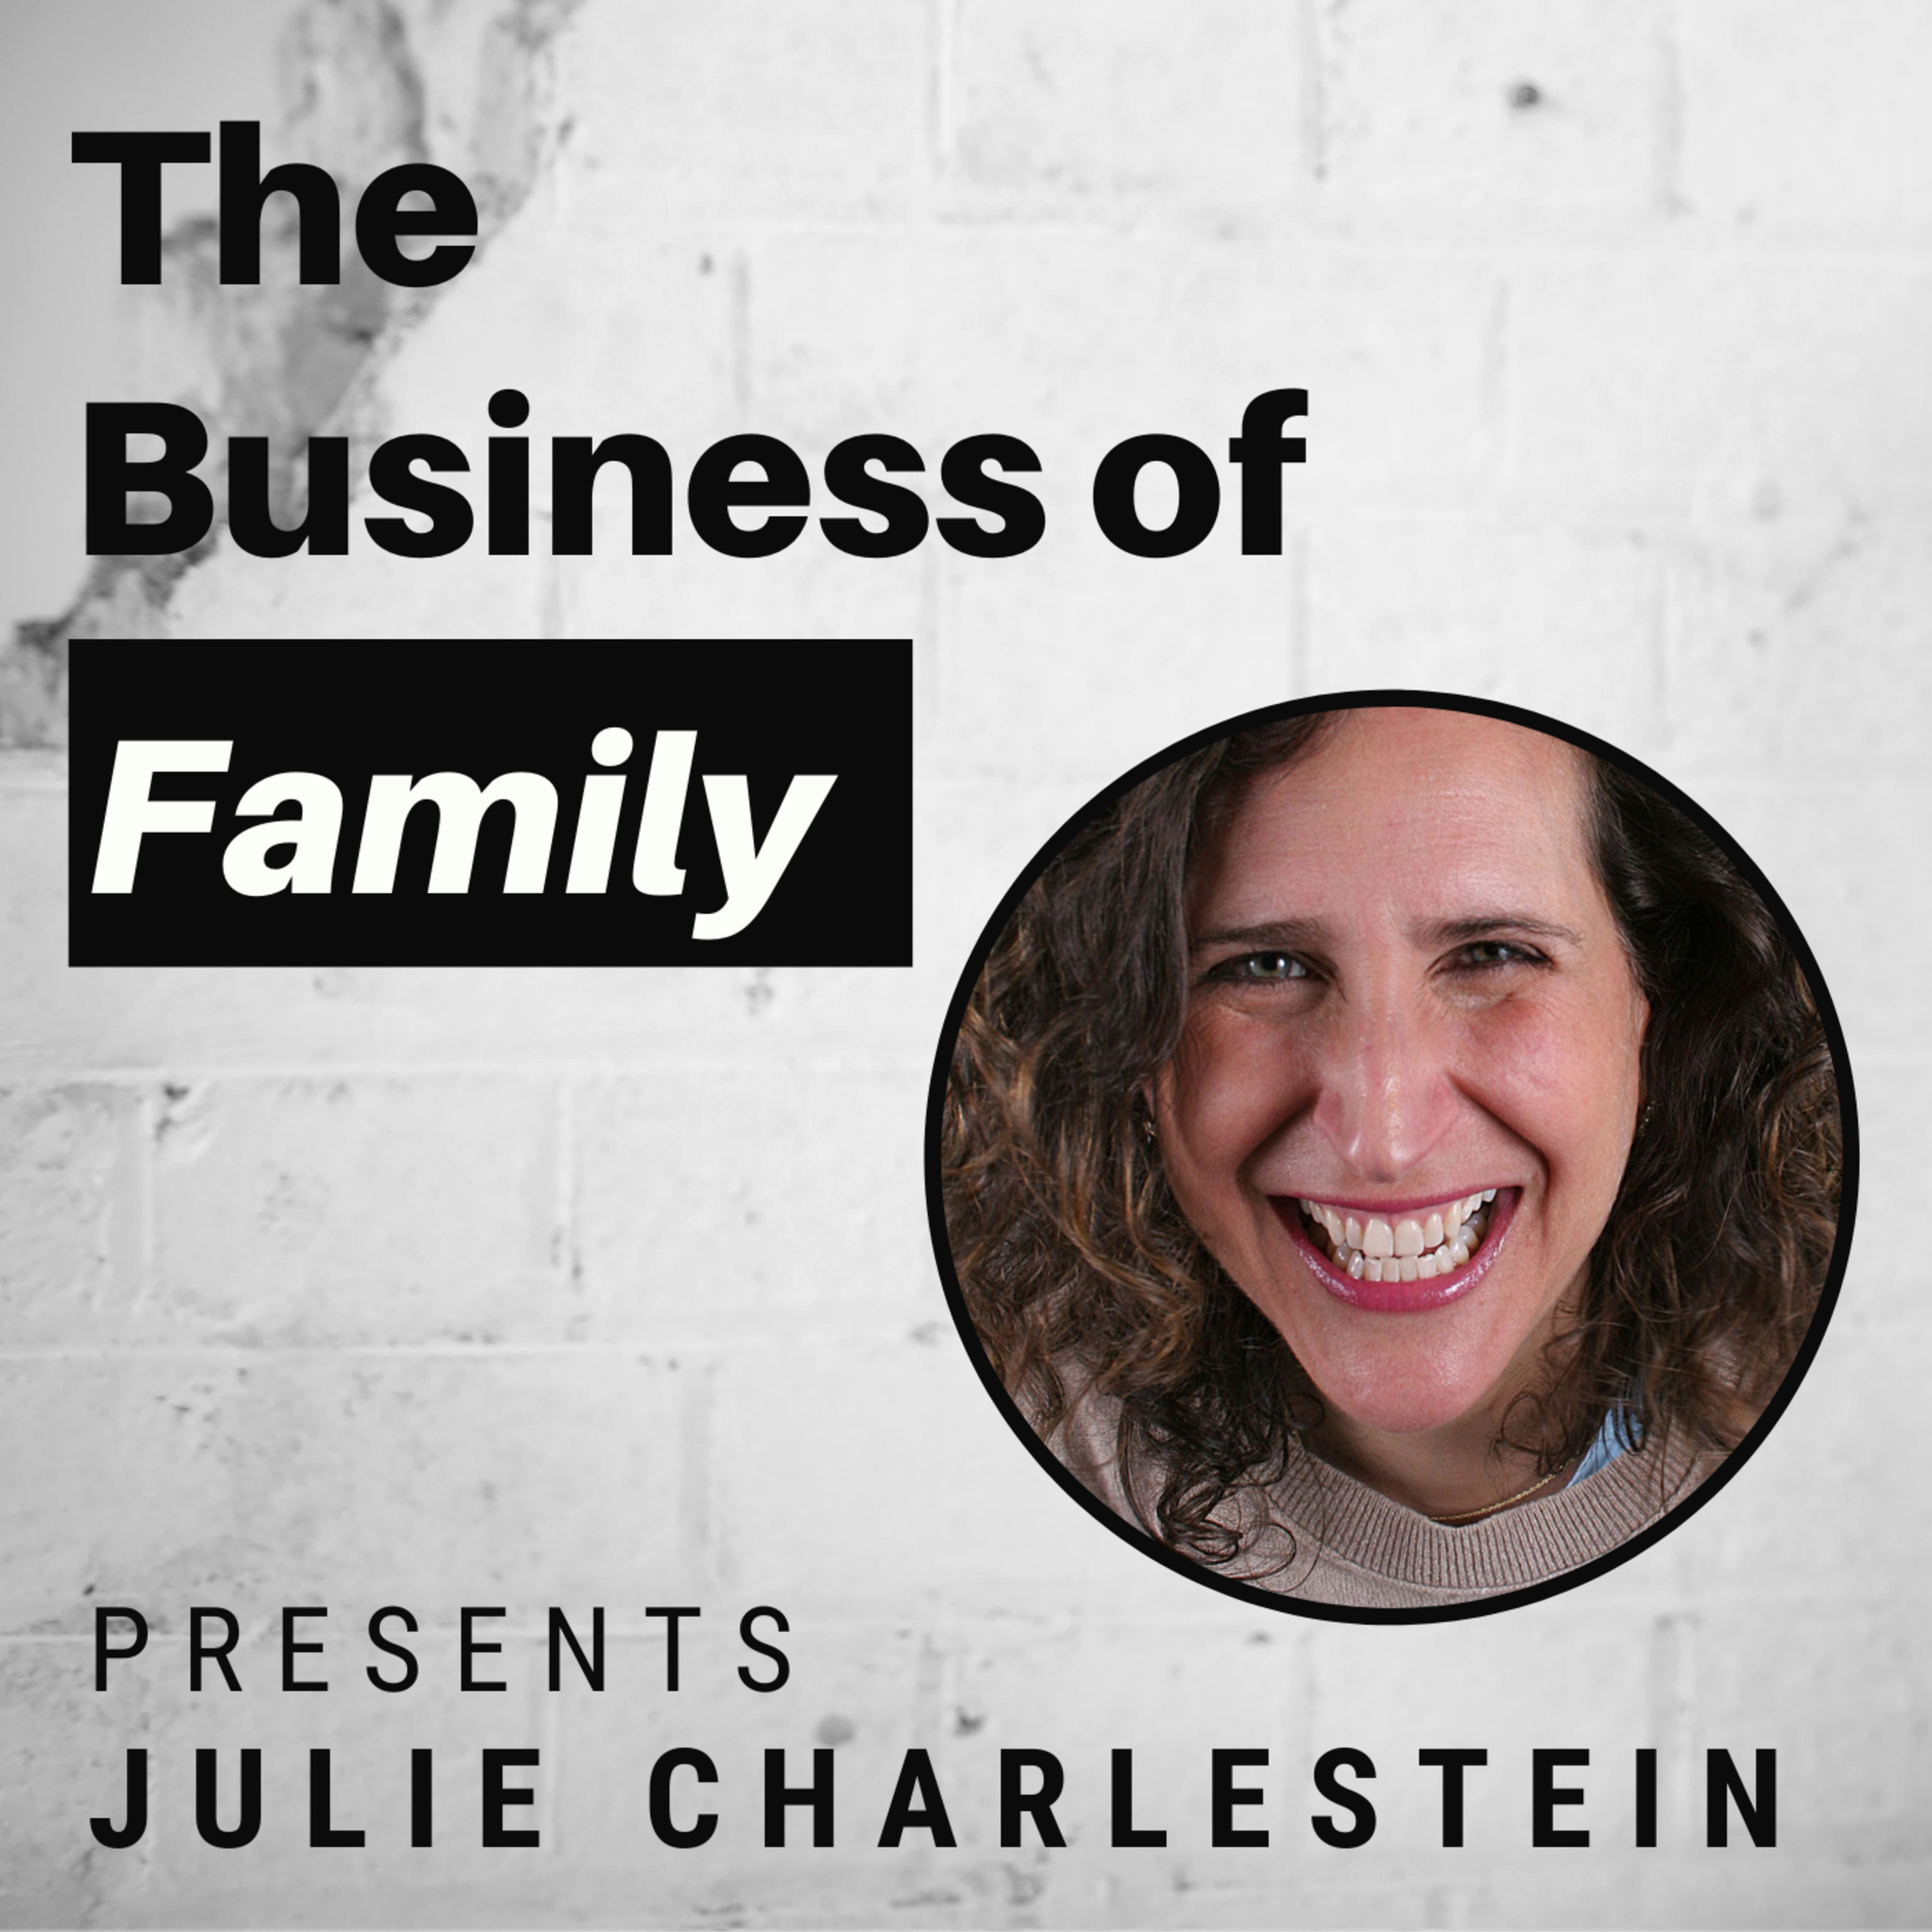 Julie Charlestein - The First Woman & 4th Generation Charlestein to Lead Premier Dental